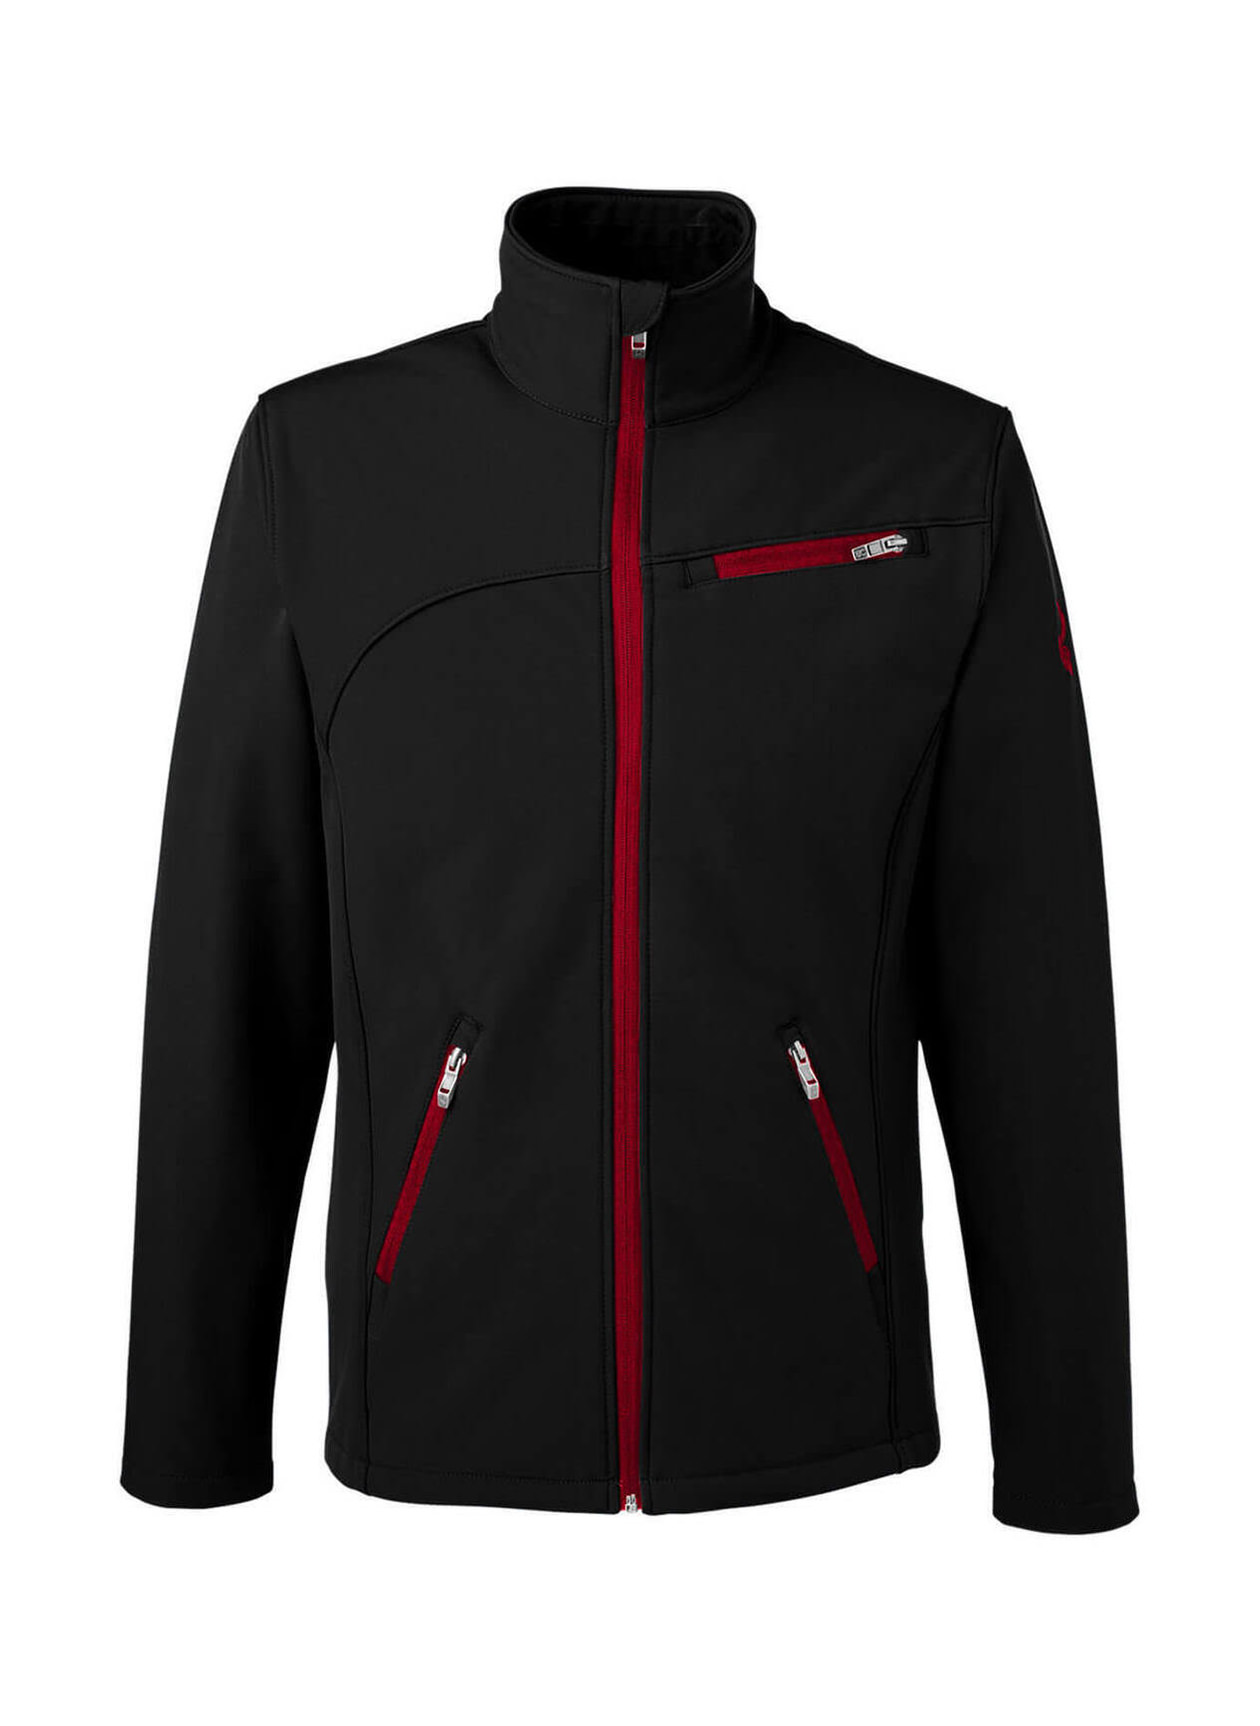 Corporate Spyder Men's Black-Red Transport Soft Shell Jacket